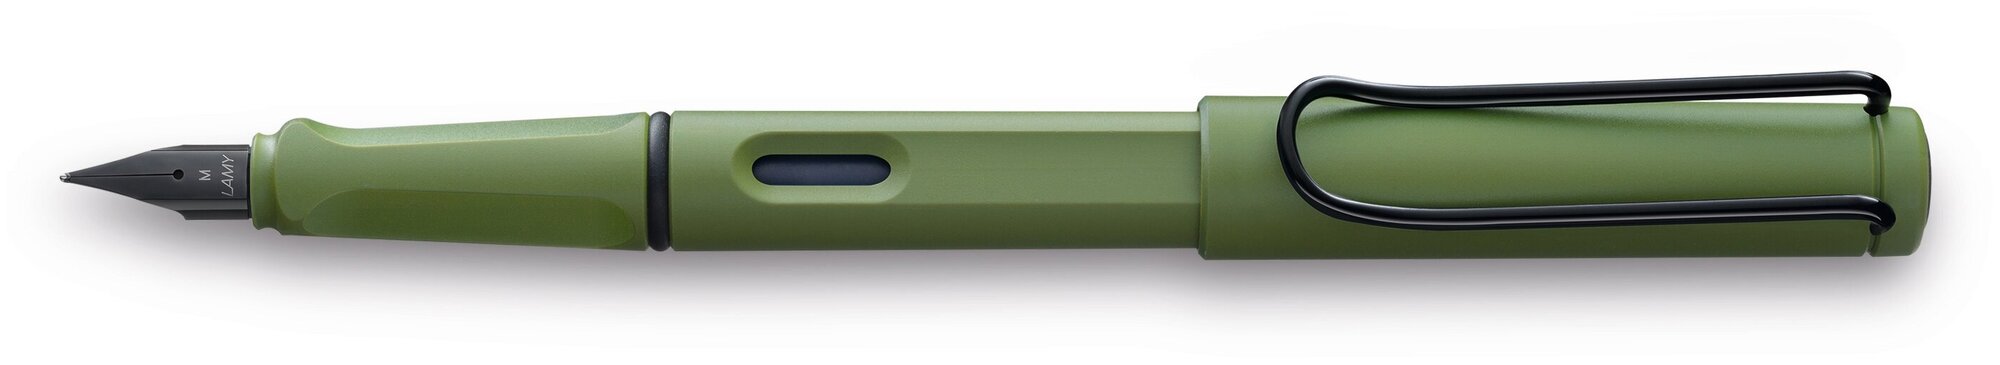 Перьевая ручка Lamy Safari Savannah Green Special Edition 2021 перо M (4035672)